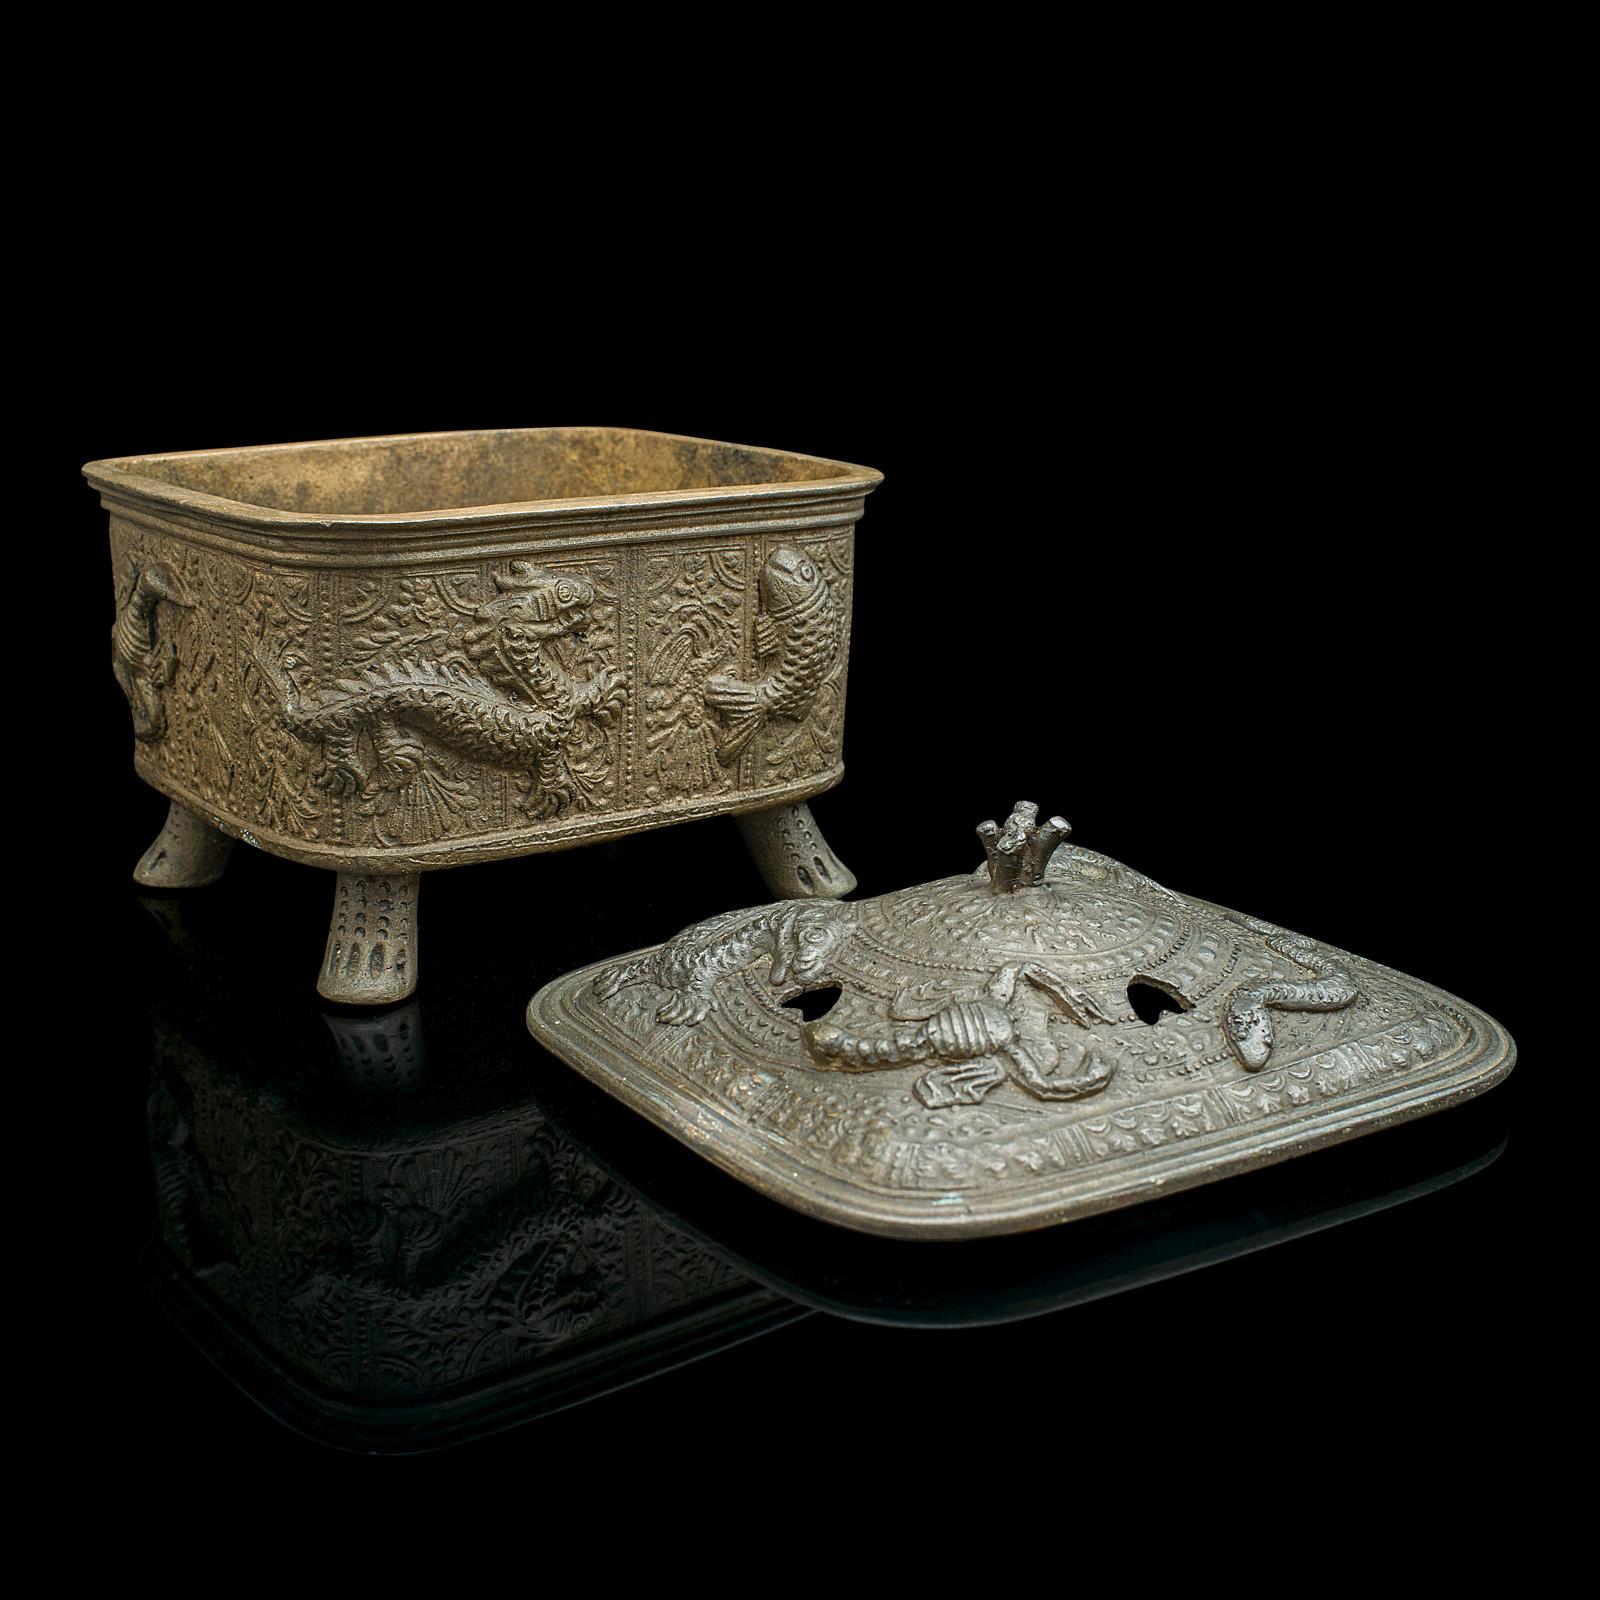 Antique Decorative Censer, Chinese, Bronze, Incense Burner, Victorian, C.1850 For Sale 2